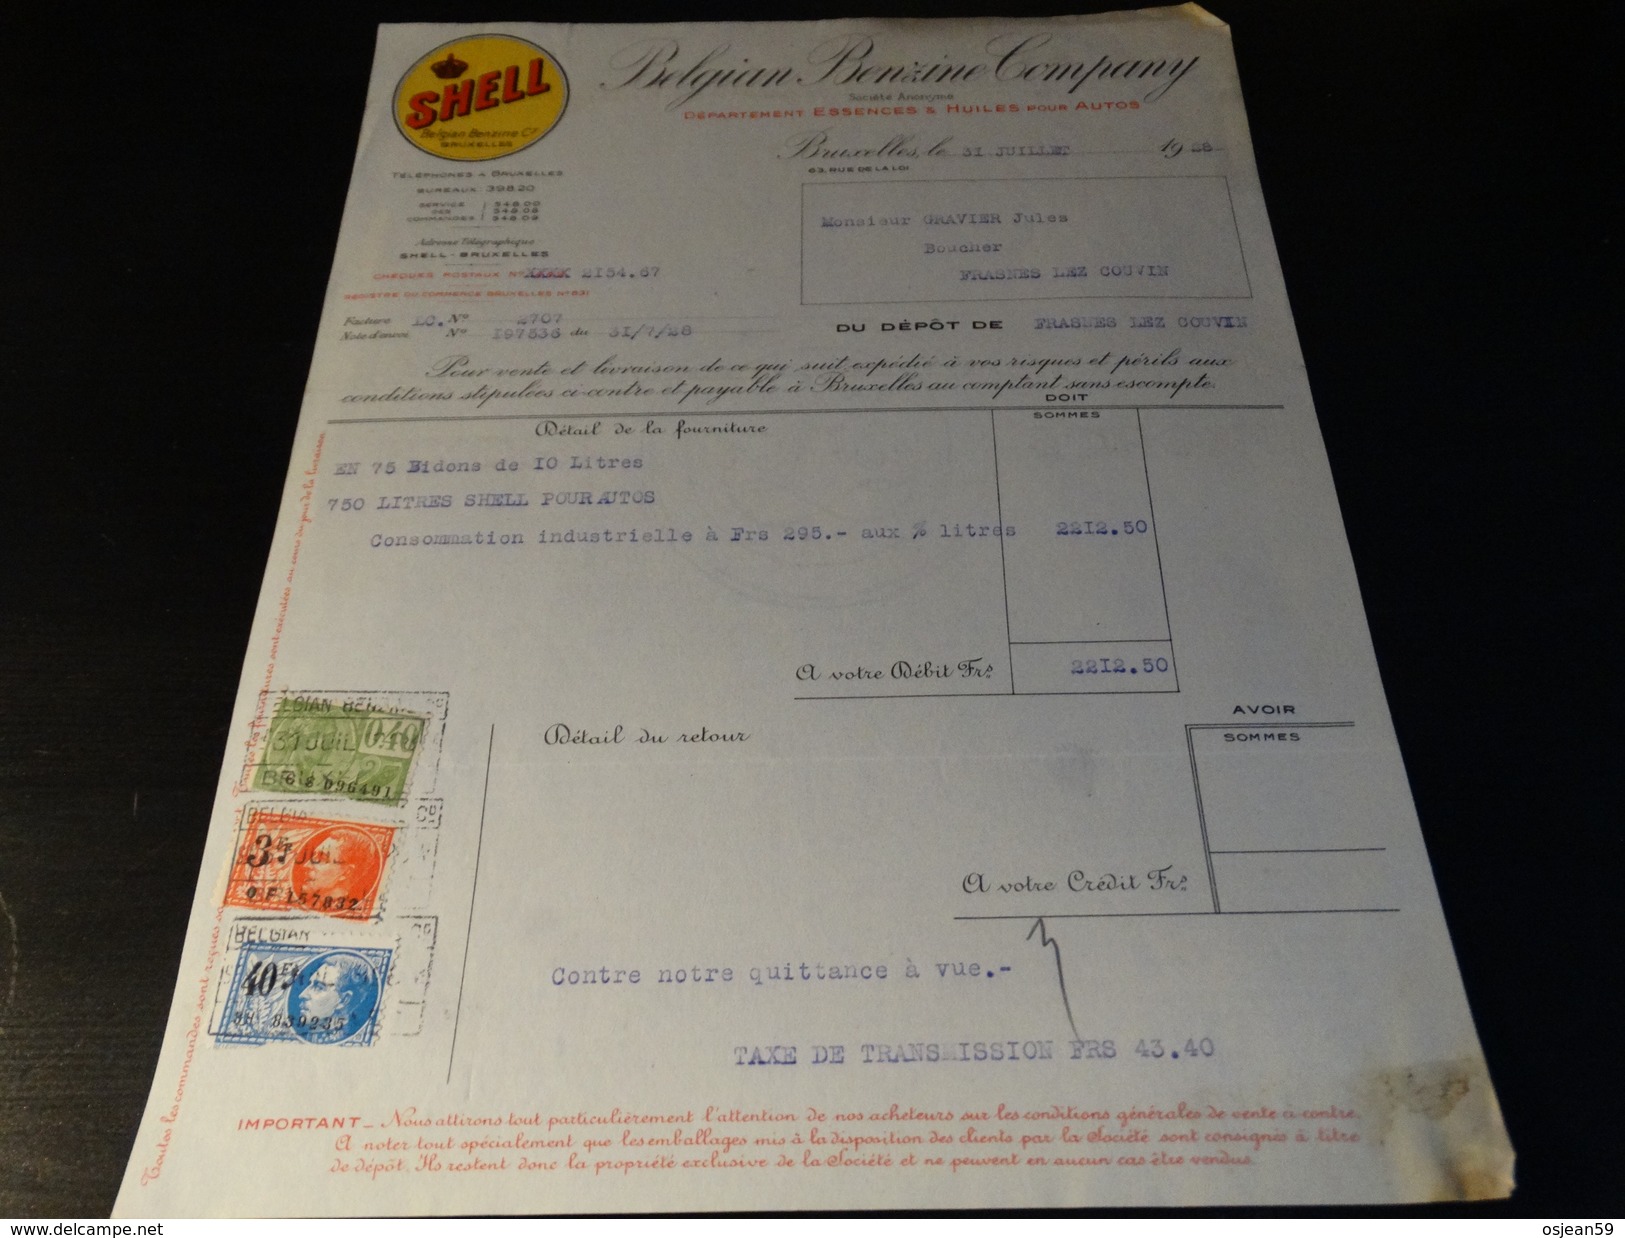 SHELL Belgian Benzine Company - Facture Du 31/07/1928 - Automobile